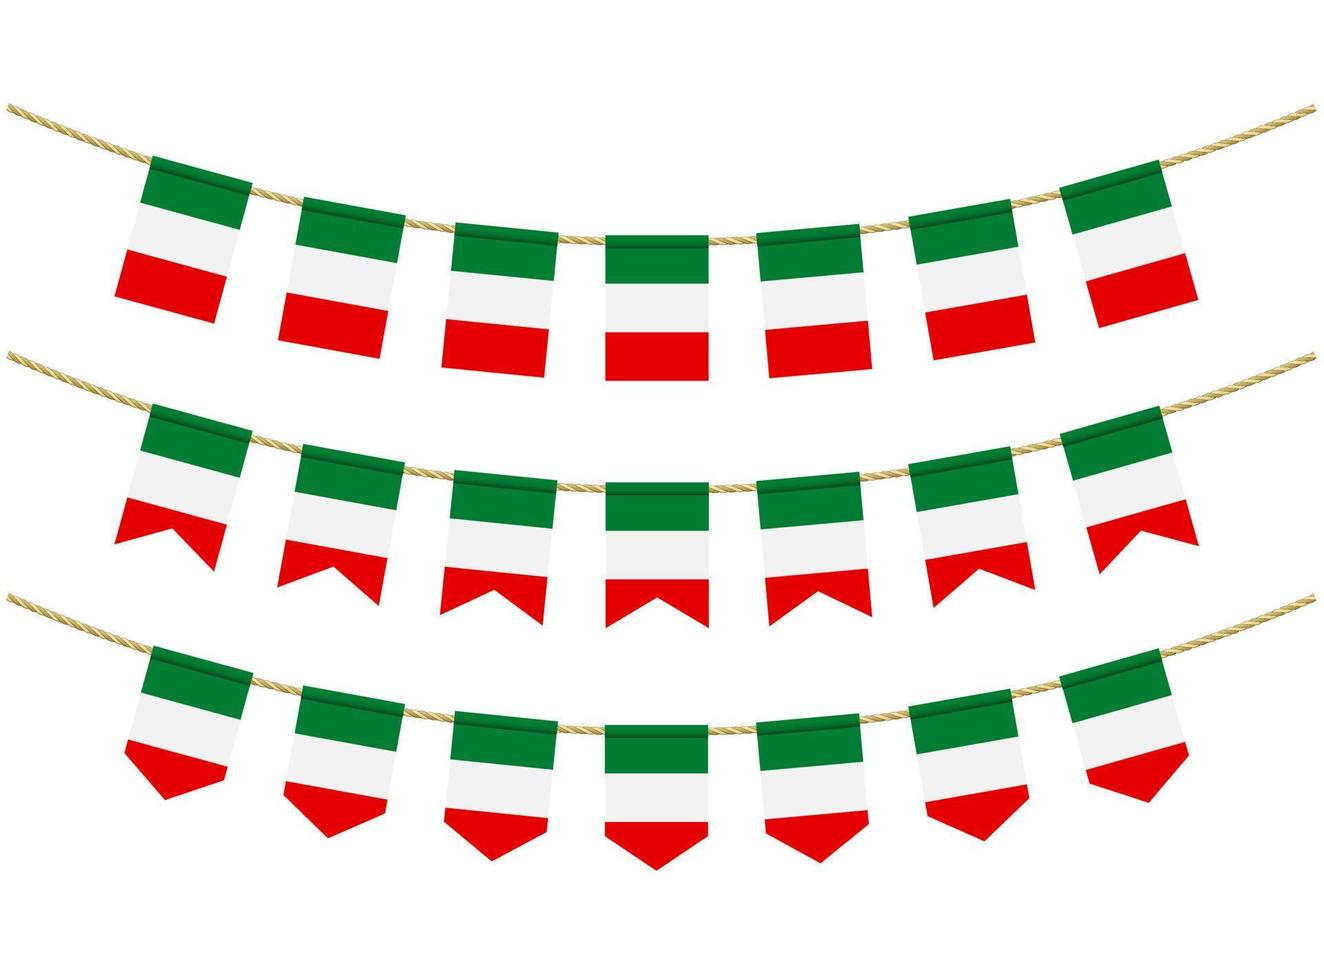 bandeira da itália nas cordas em fundo branco. conjunto de bandeiras de estamenha patriótica. decoração de estamenha da bandeira da itália vetor